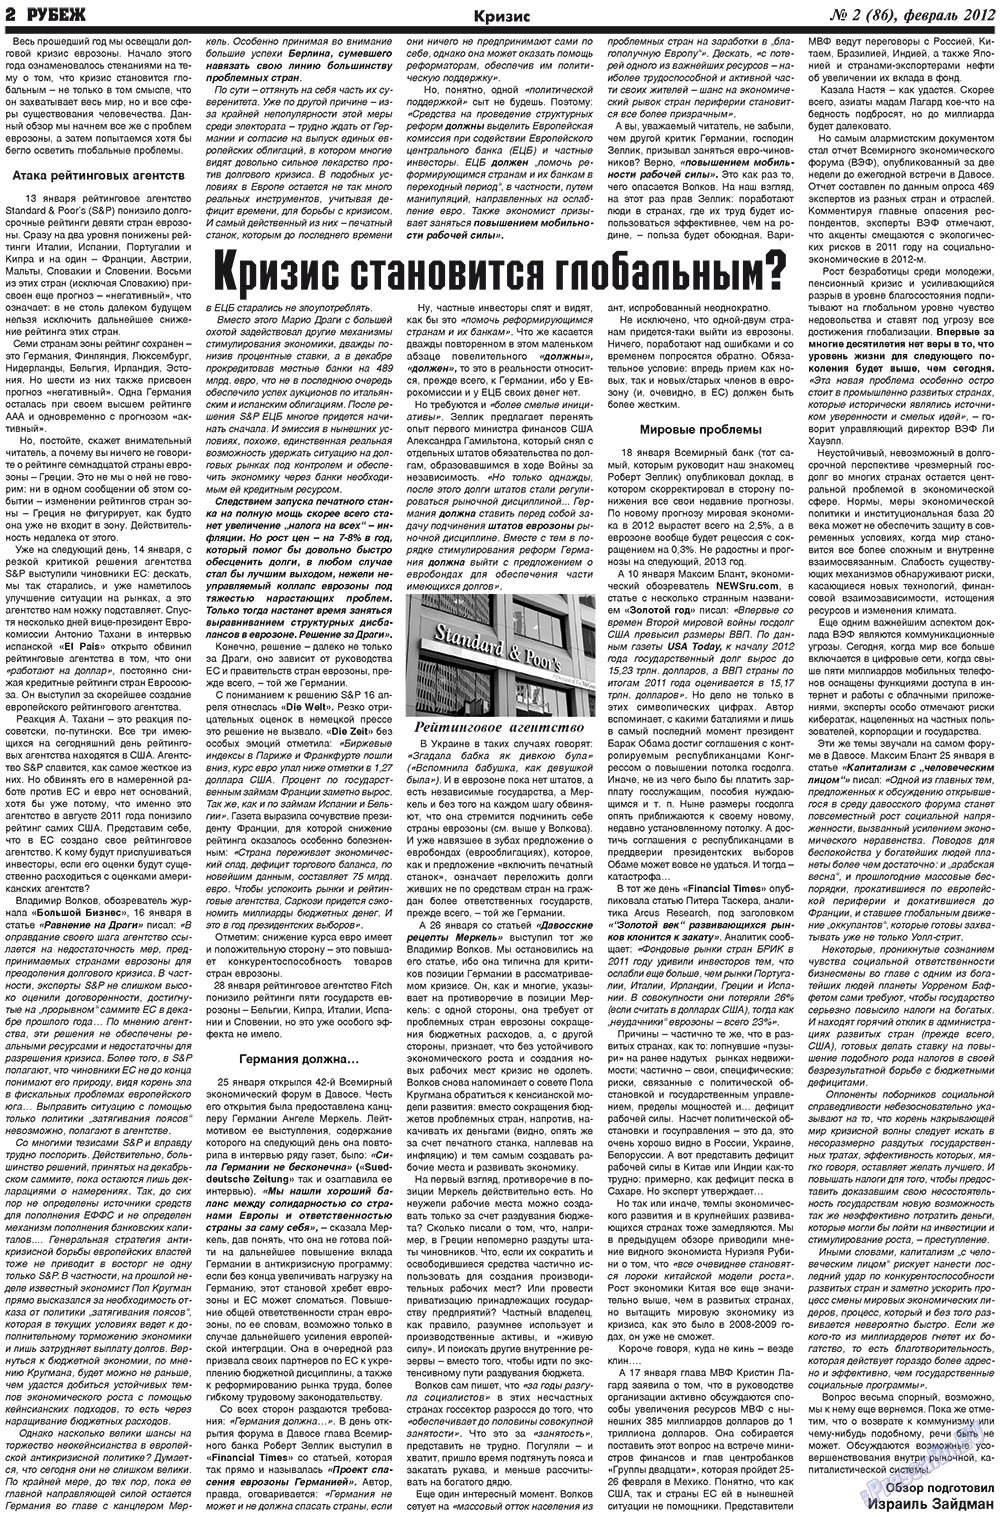 Рубеж, газета. 2012 №2 стр.2